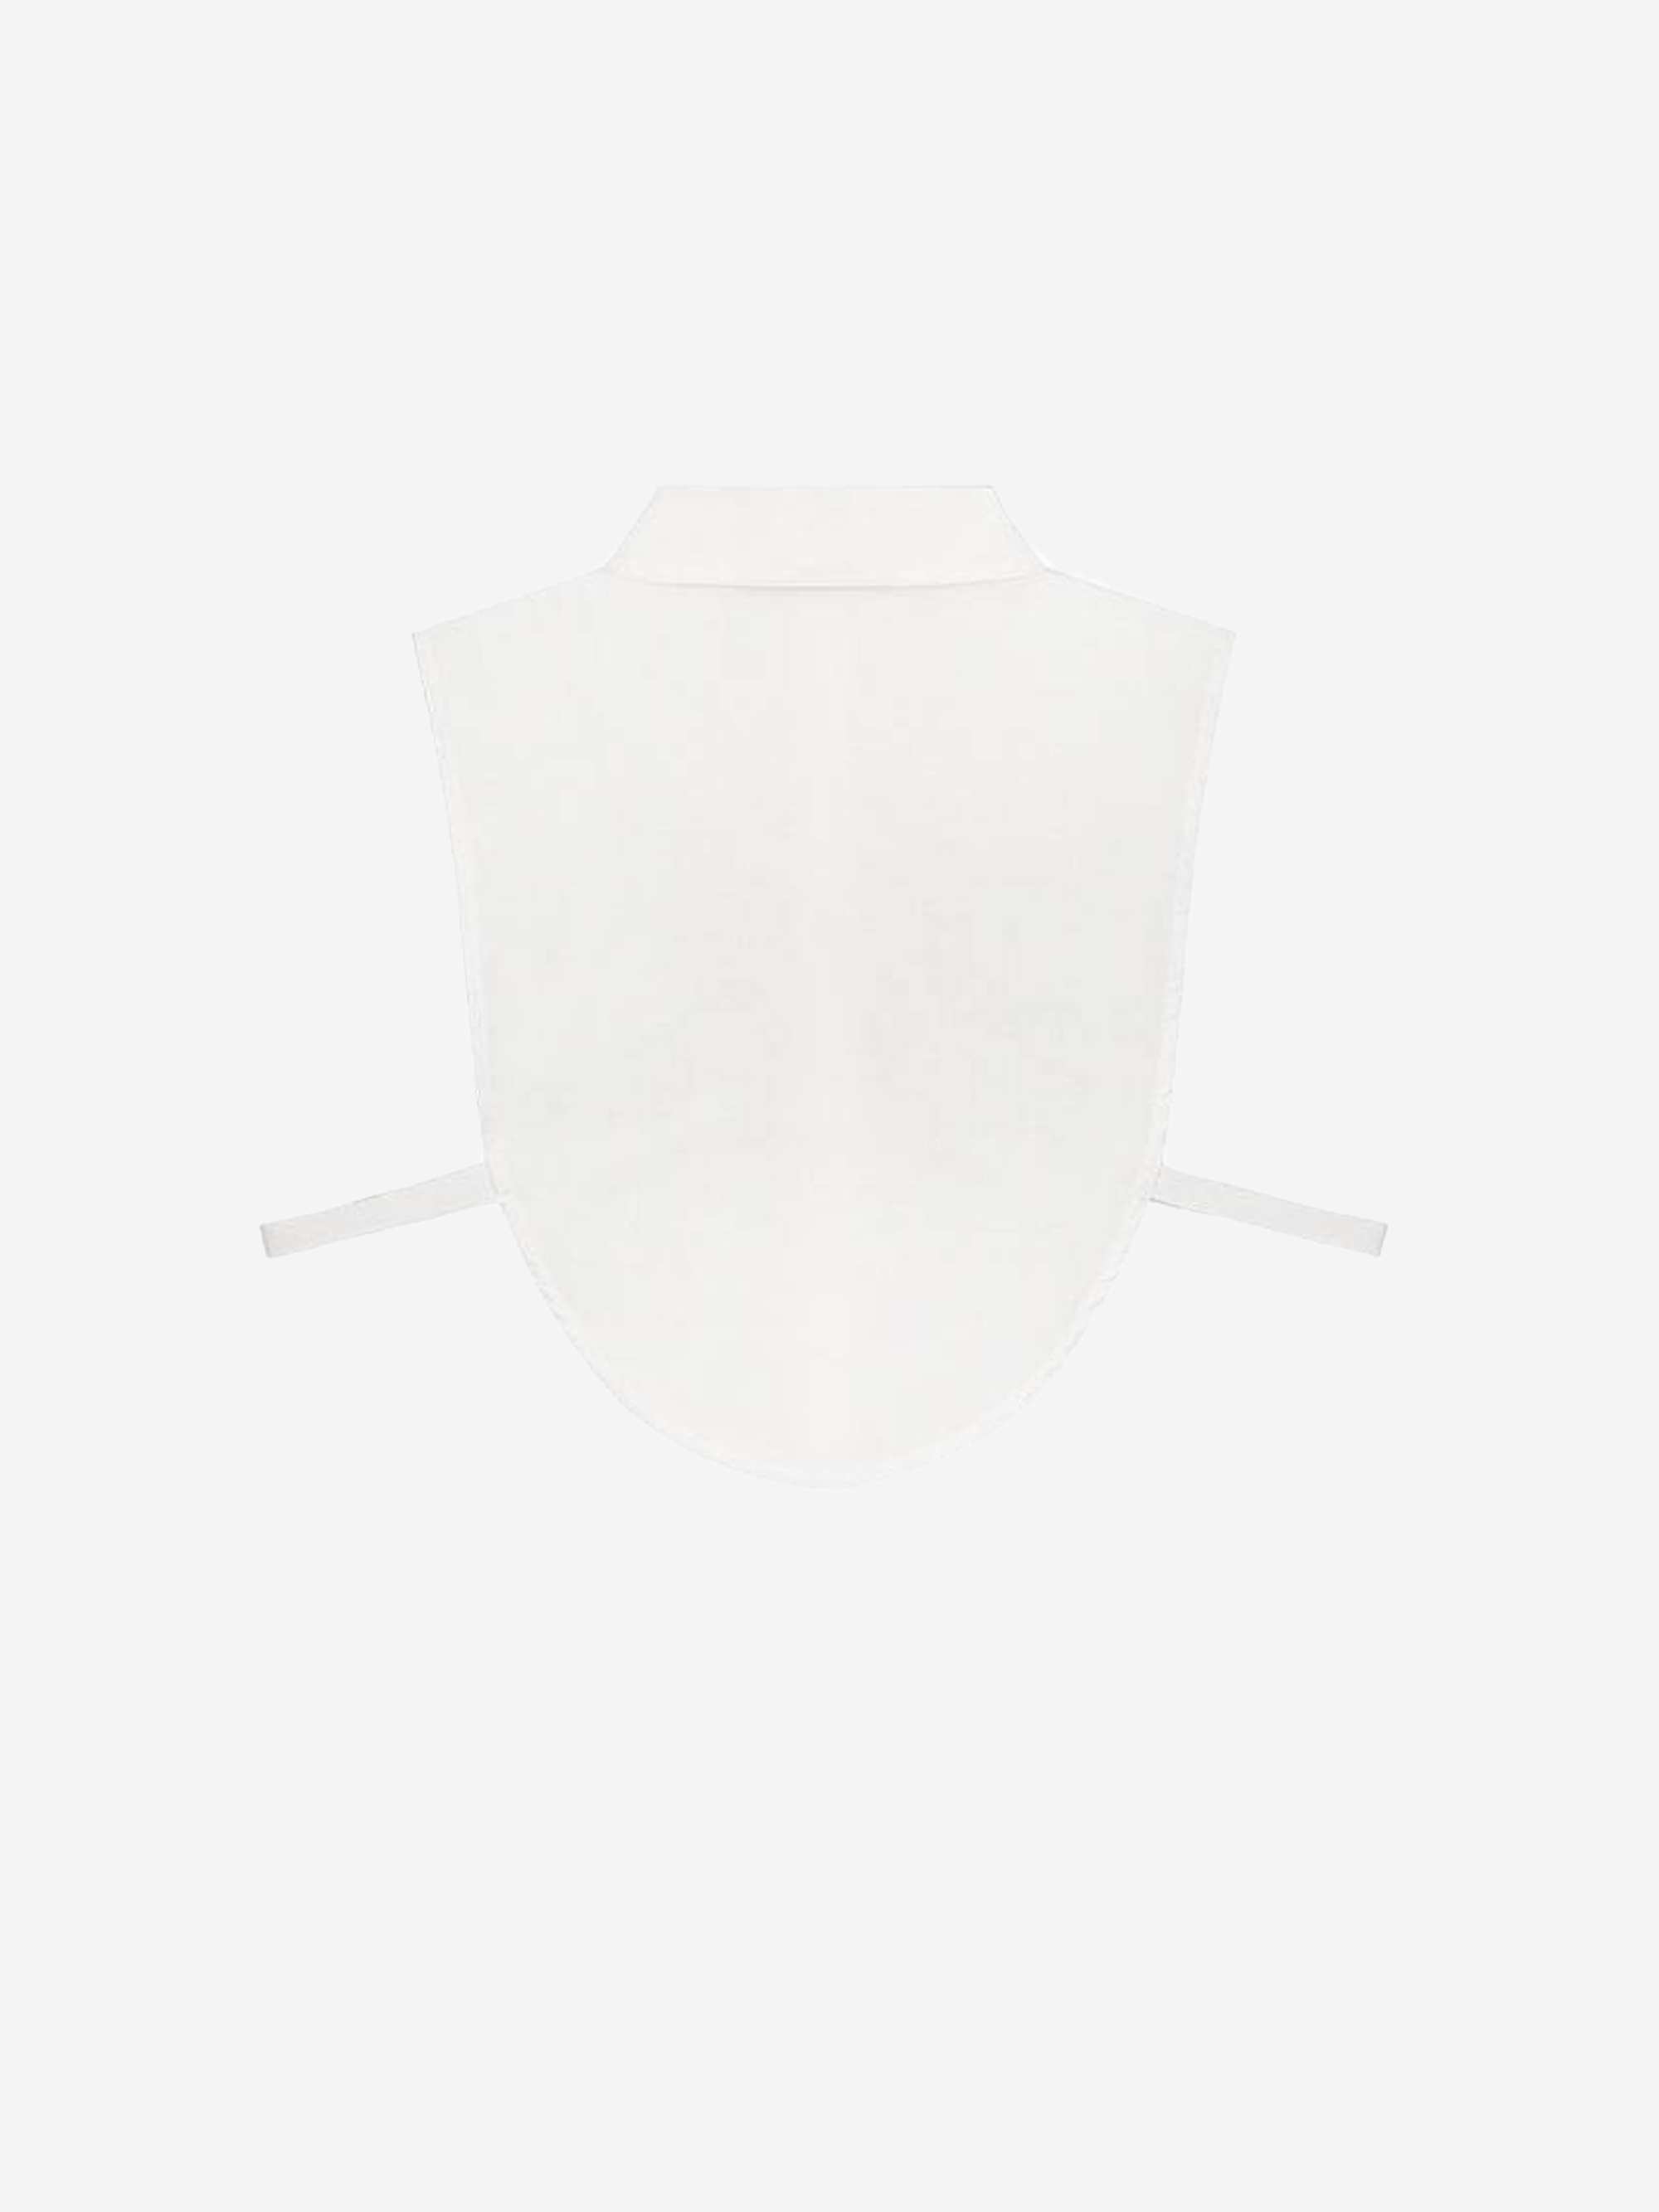 White shirt collar